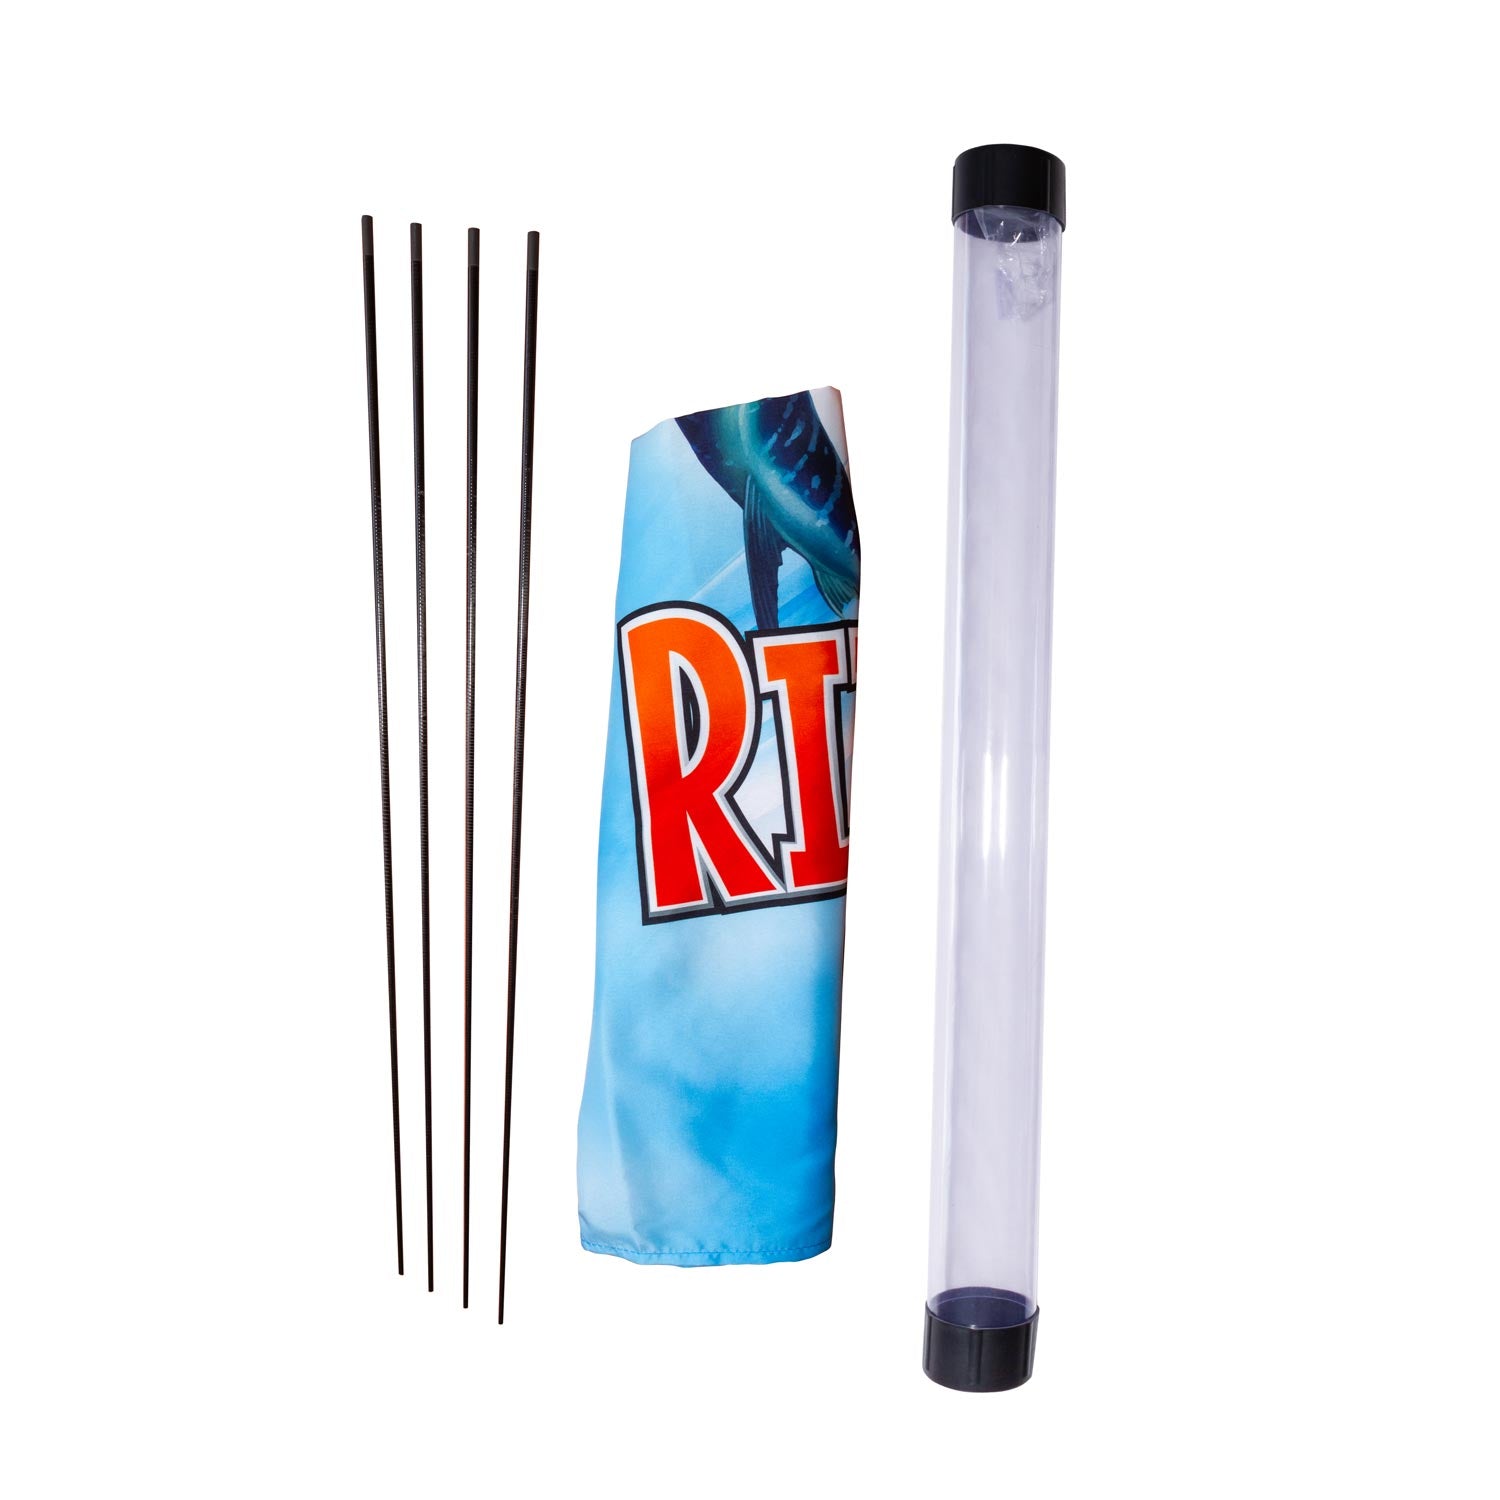 Rite Angler Logo saltwater fishing kite package contents